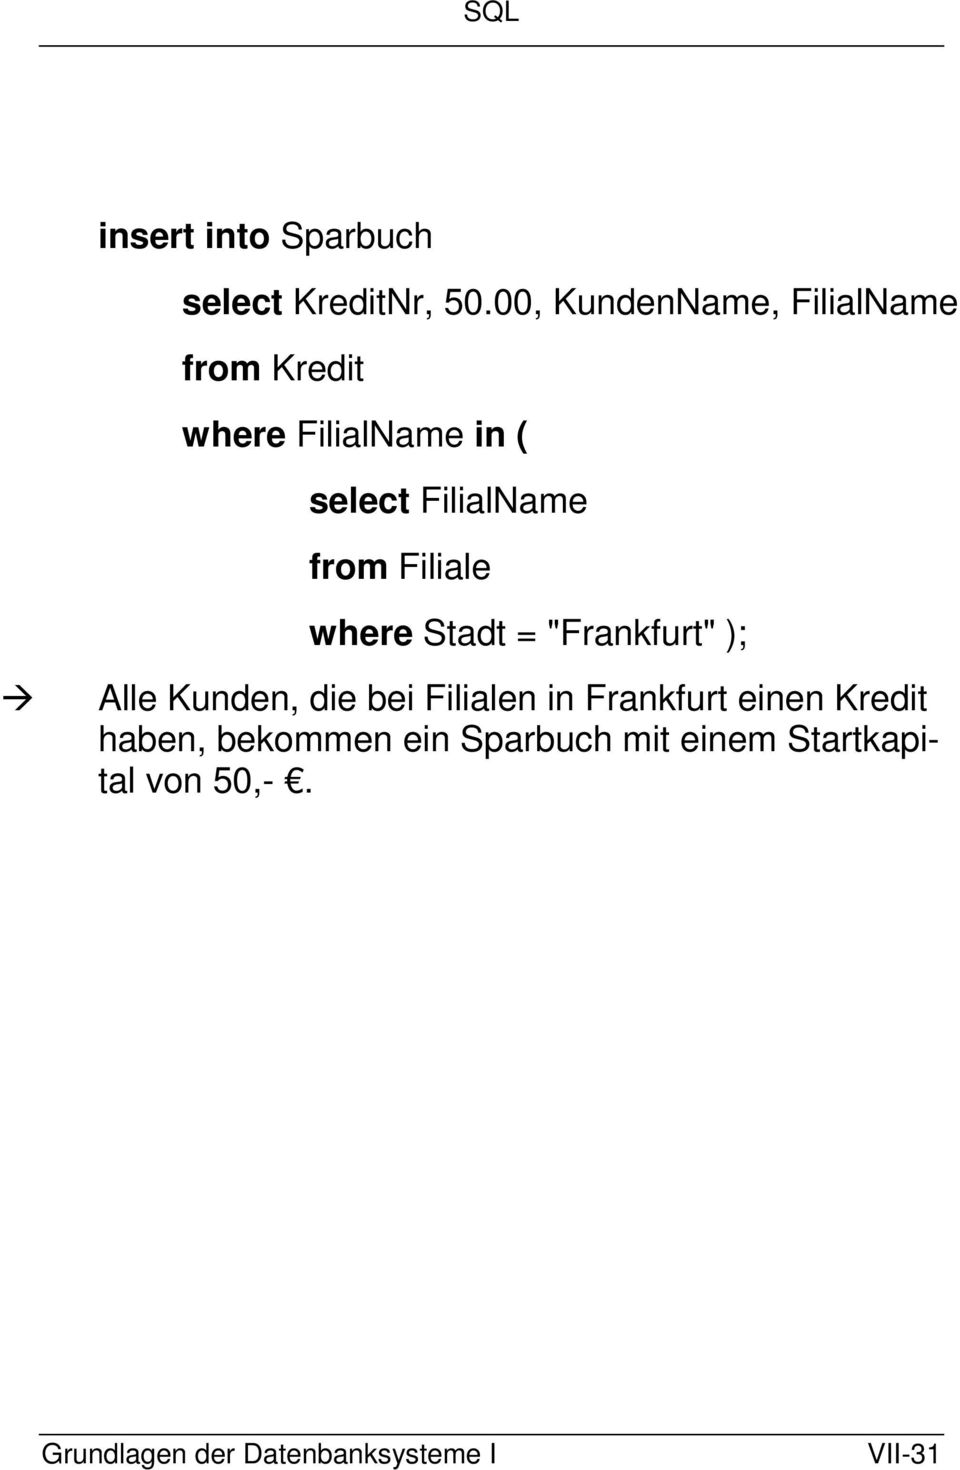 FilialName from Filiale where Stadt = "Frankfurt" ); Alle Kunden, die